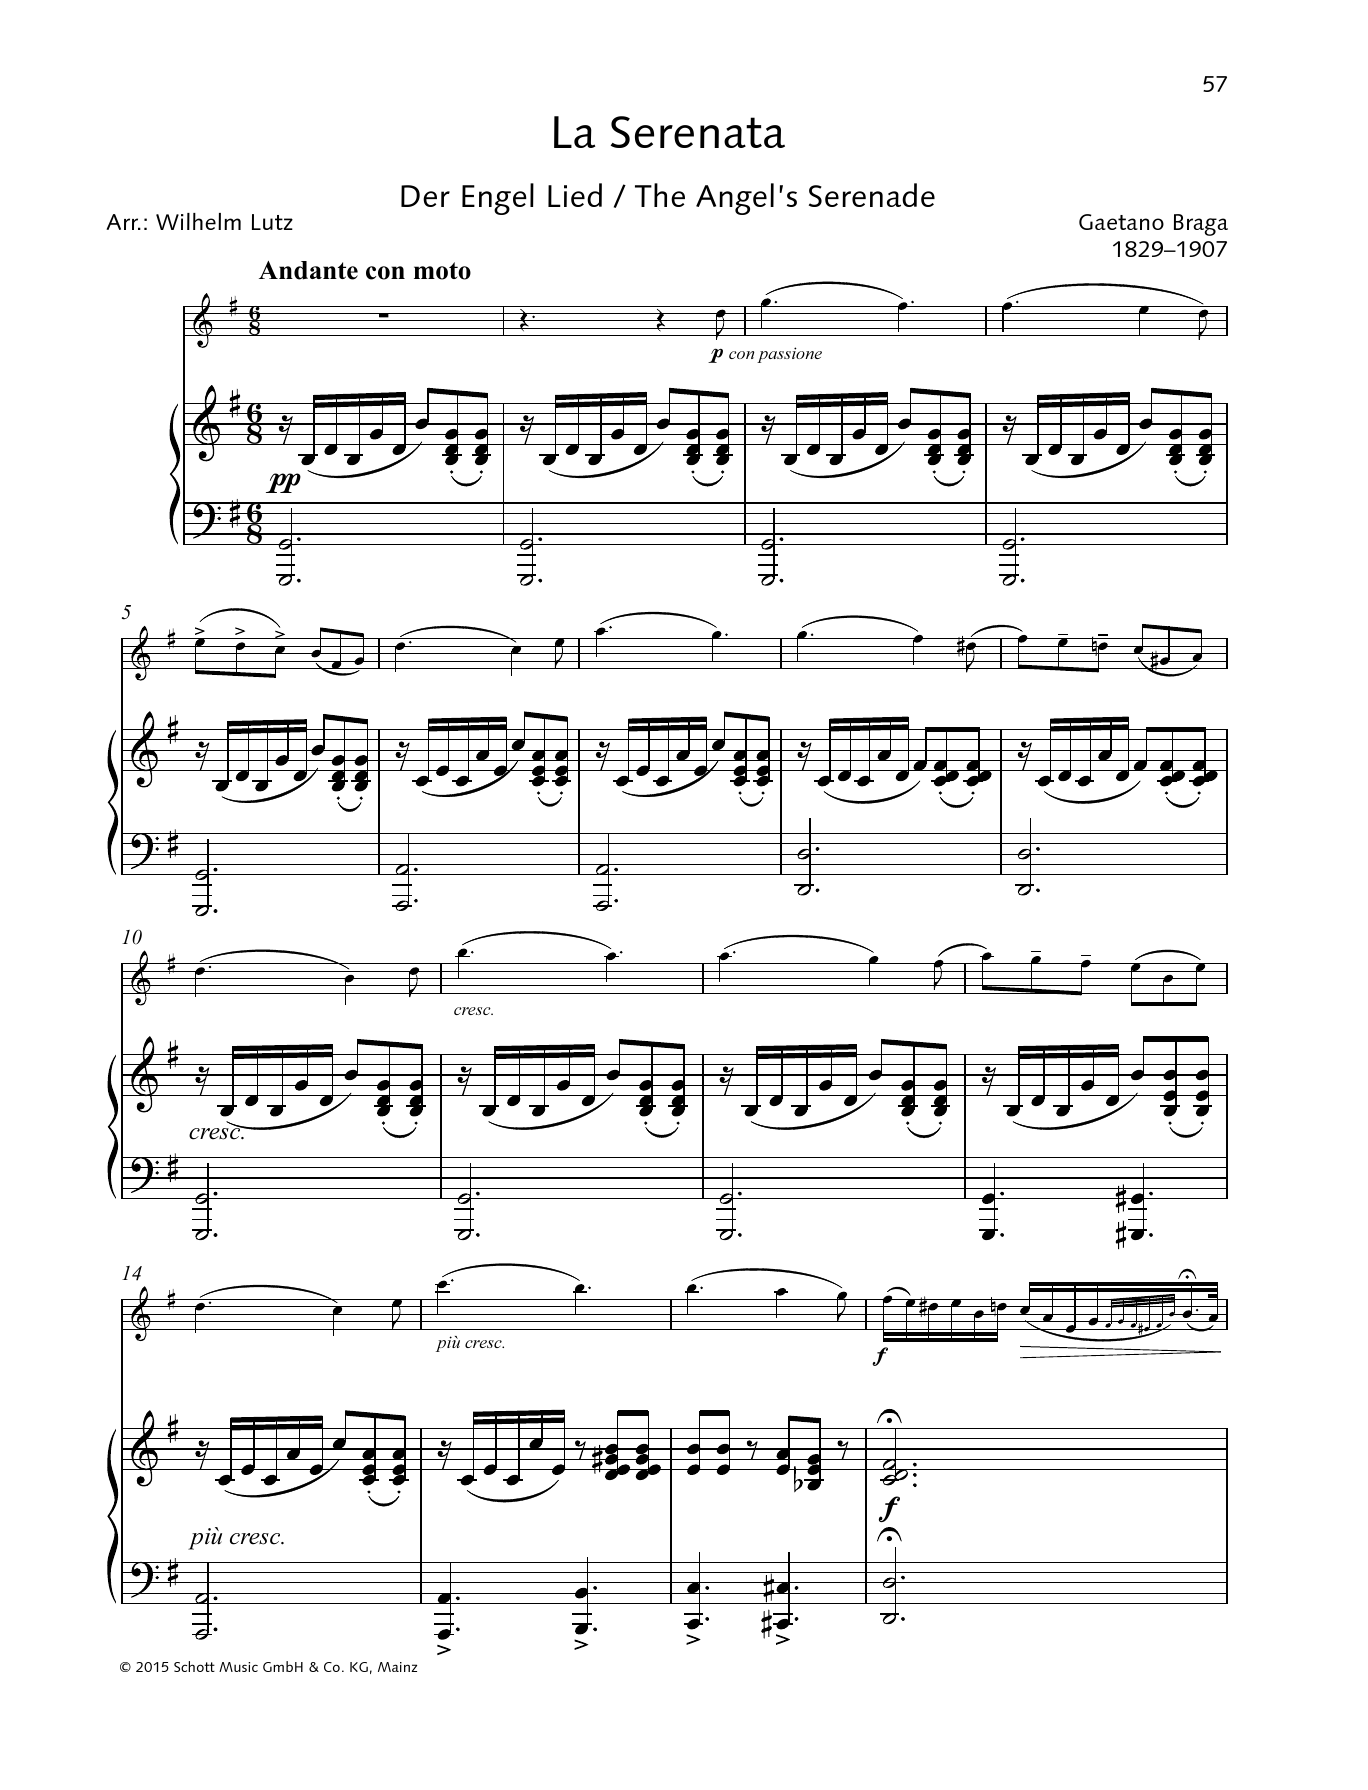 Download Gaetano Braga The Angel's Serenade Sheet Music